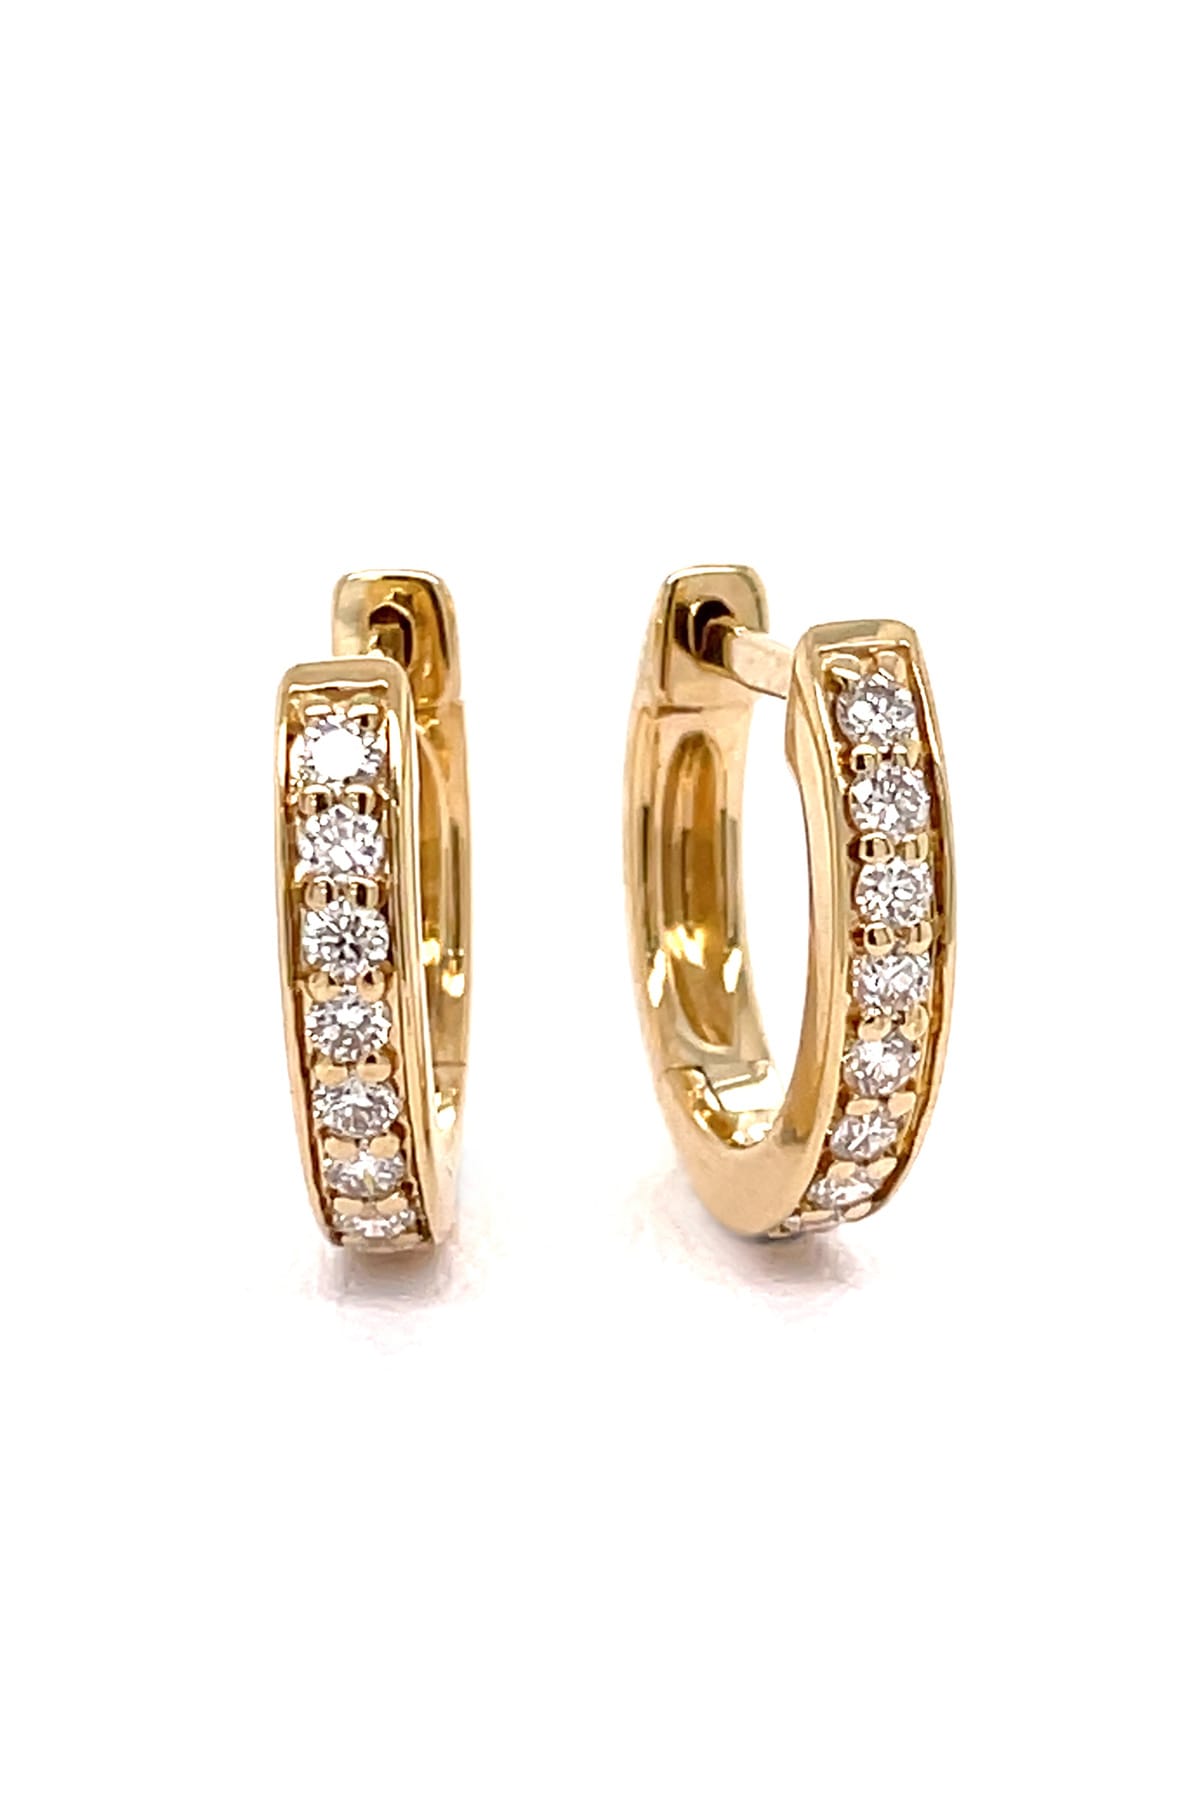 18 Carat Yellow Gold Diamond Huggie Earrings available at LeGassick Diamonds and Jewellery Gold Coast, Australia.